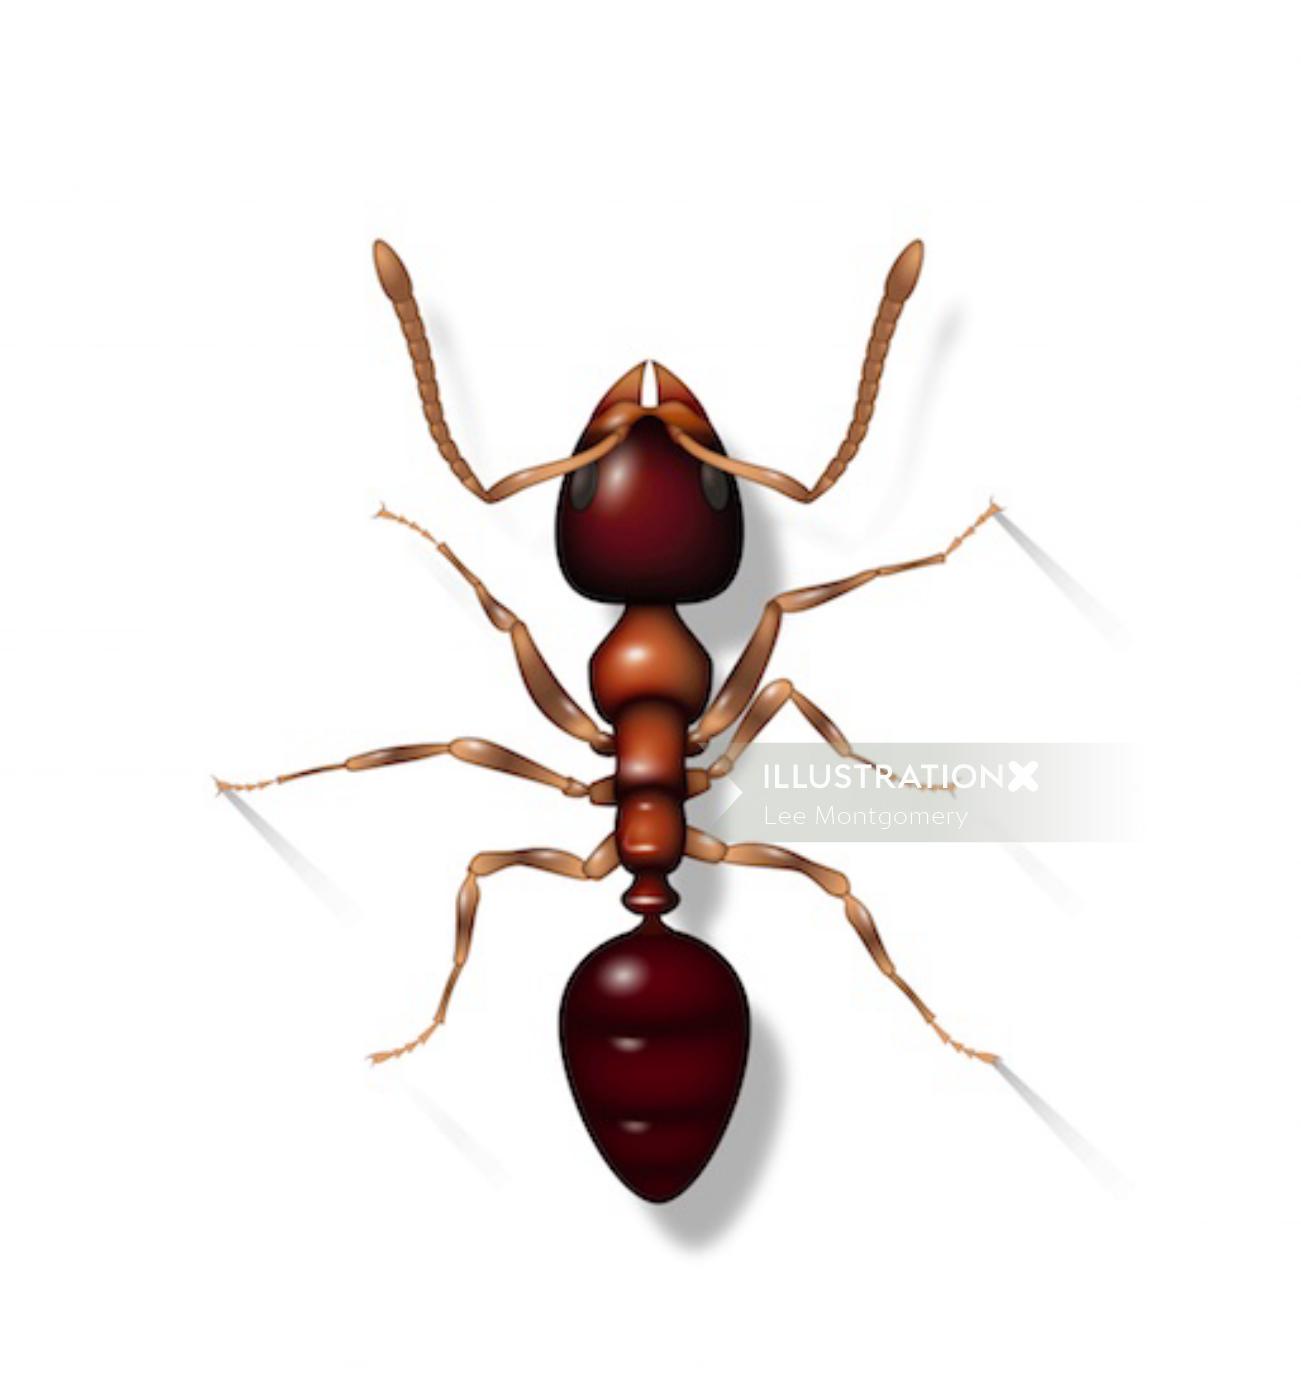 Animation de fourmi